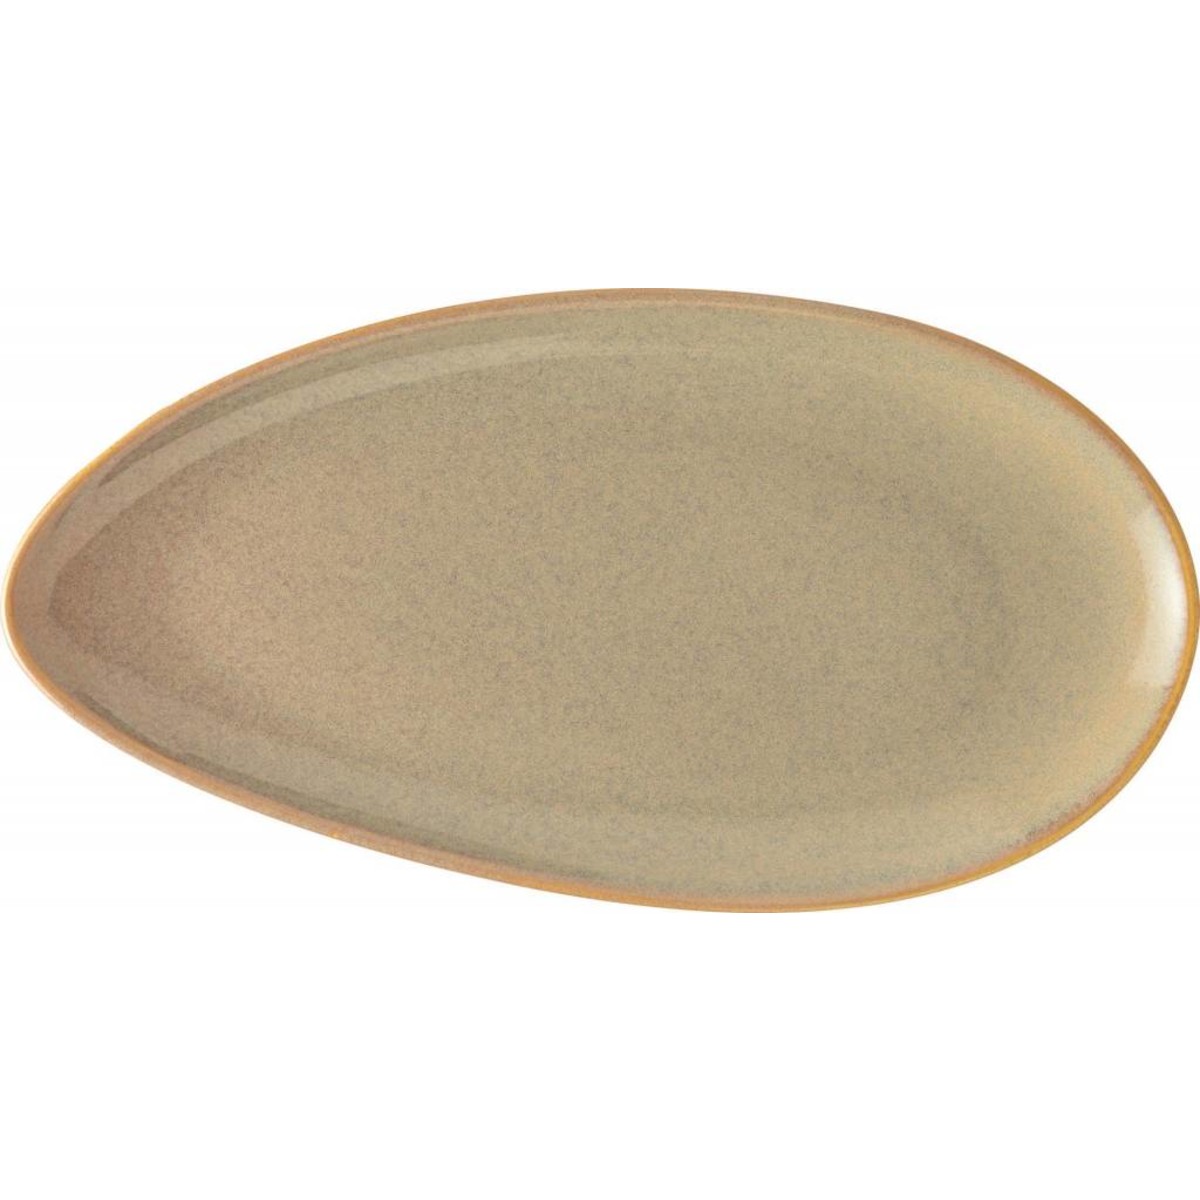 Porzellanserie „Vida" Platte flach oval 32cm